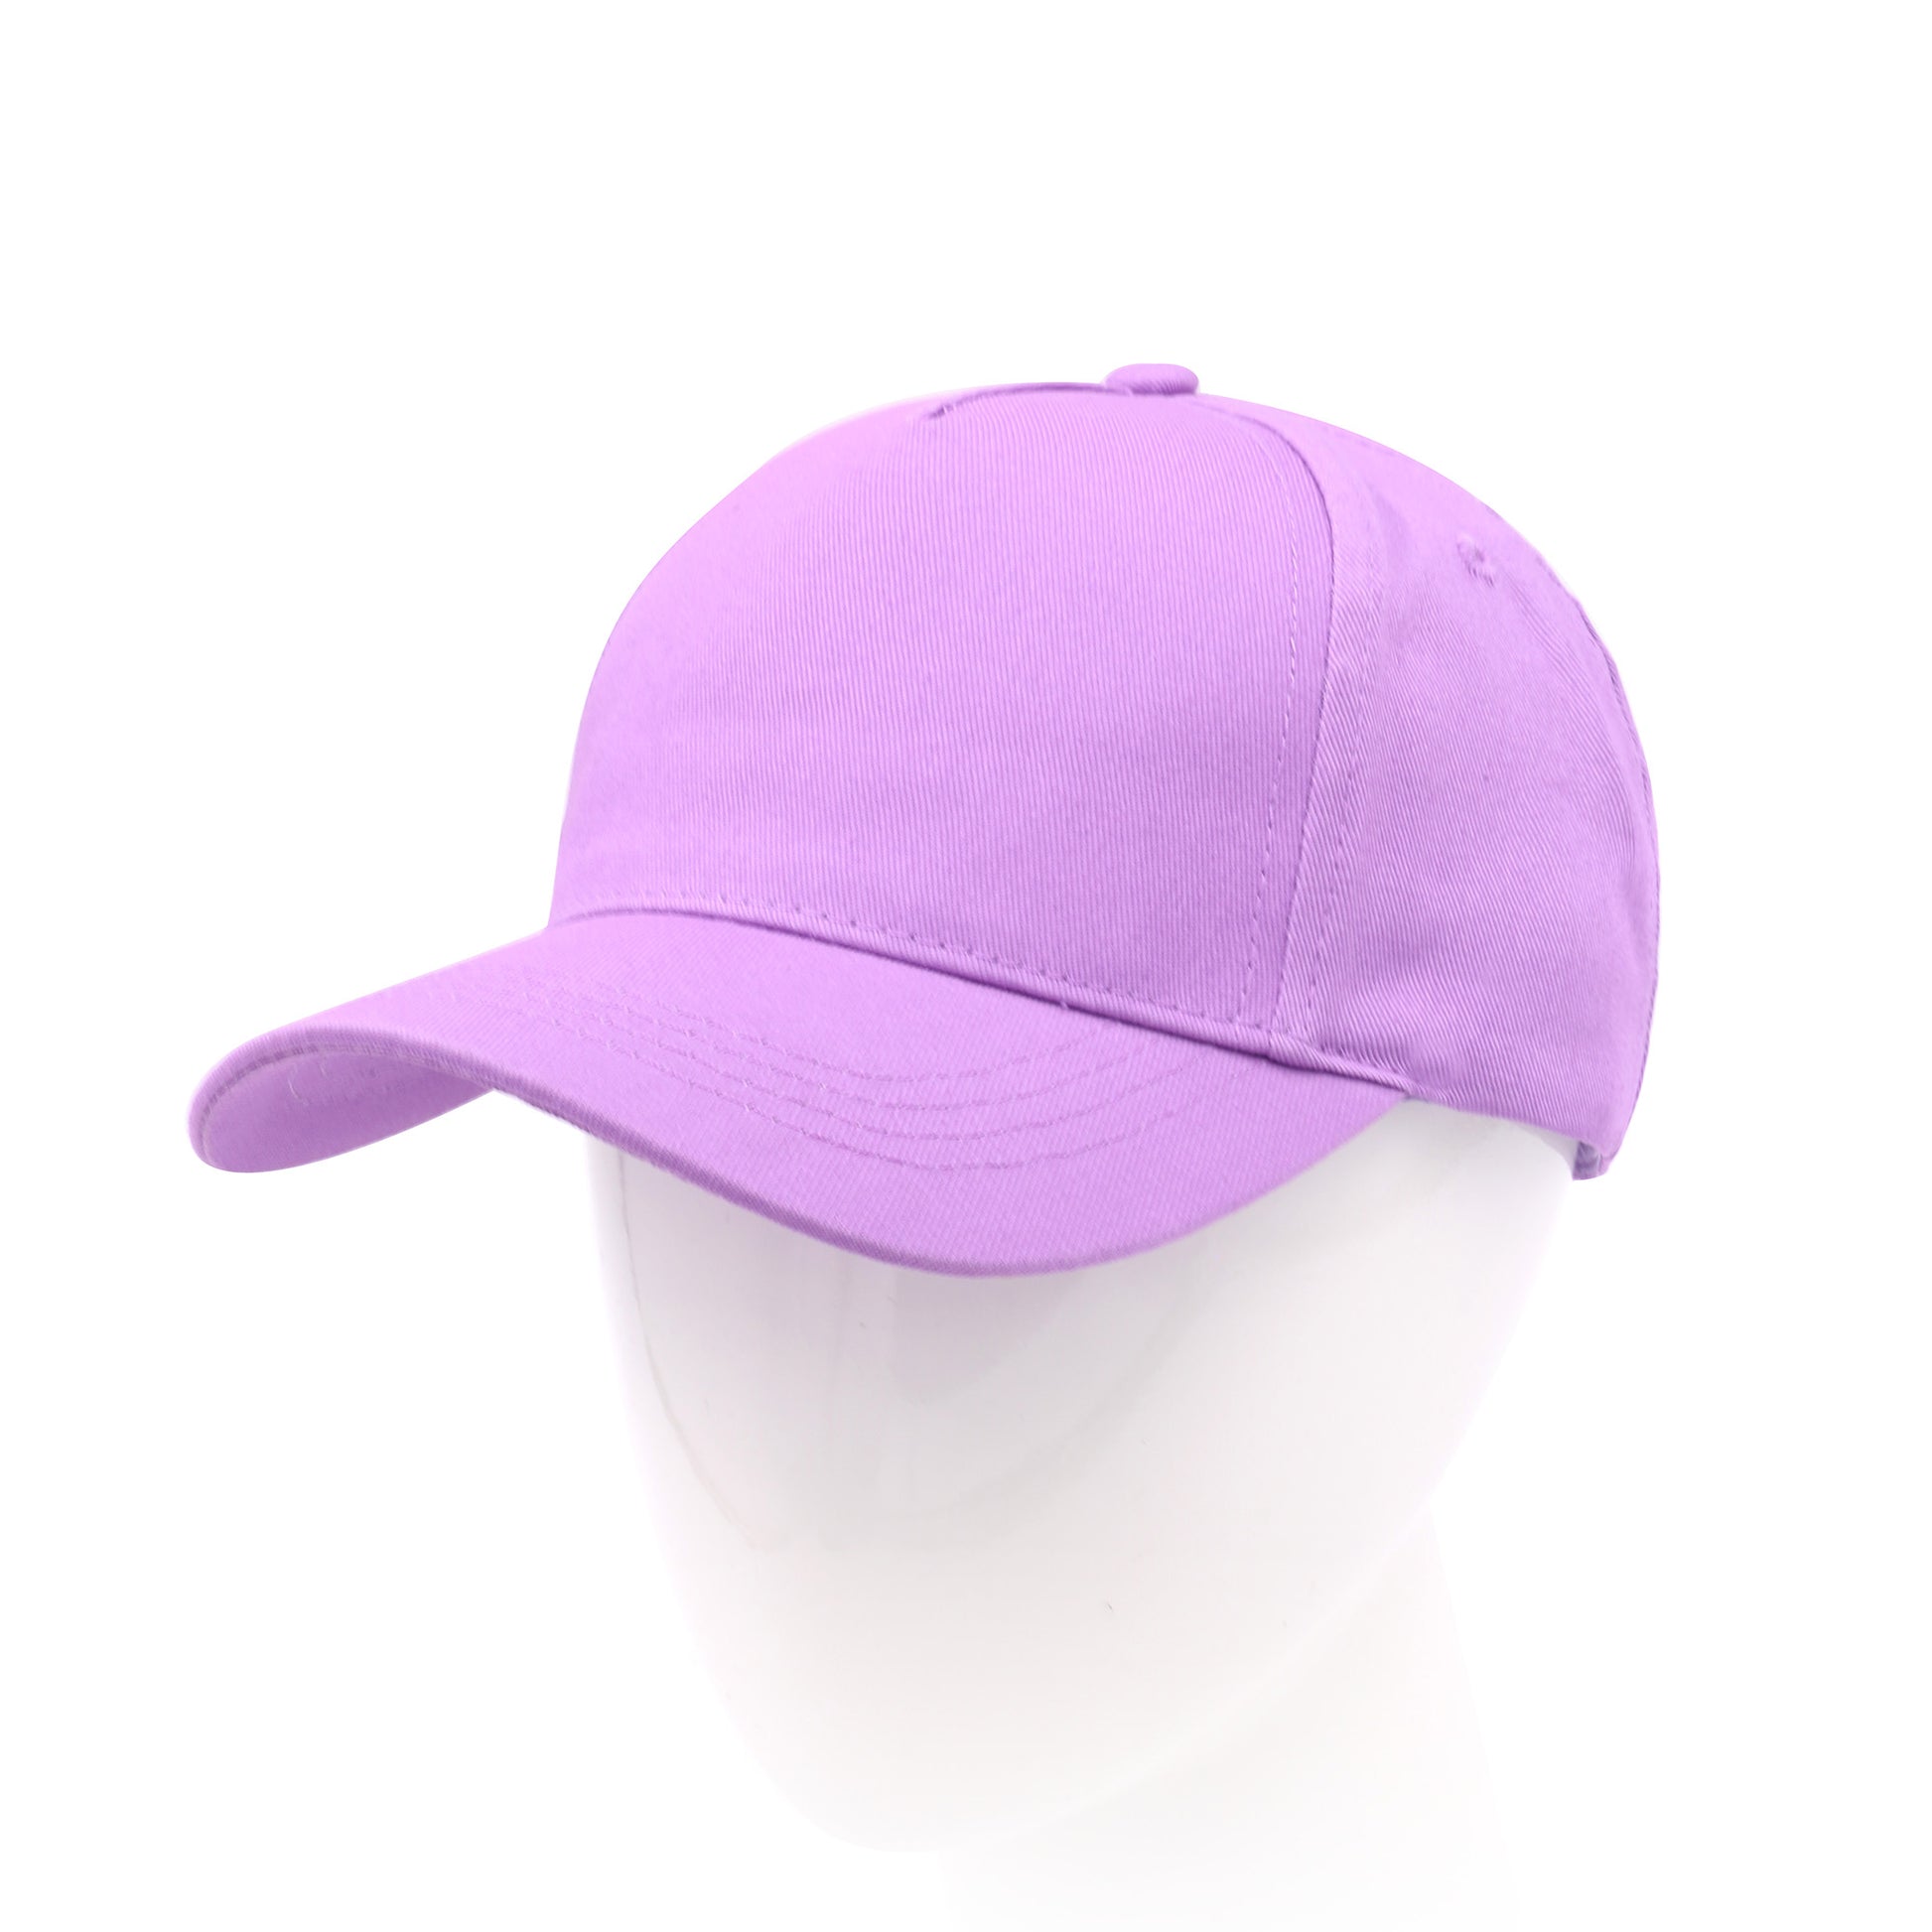 Dark Pink Plain Baseball Cap for Men/Girl/Womens Unisex Cap - ACCEHUT